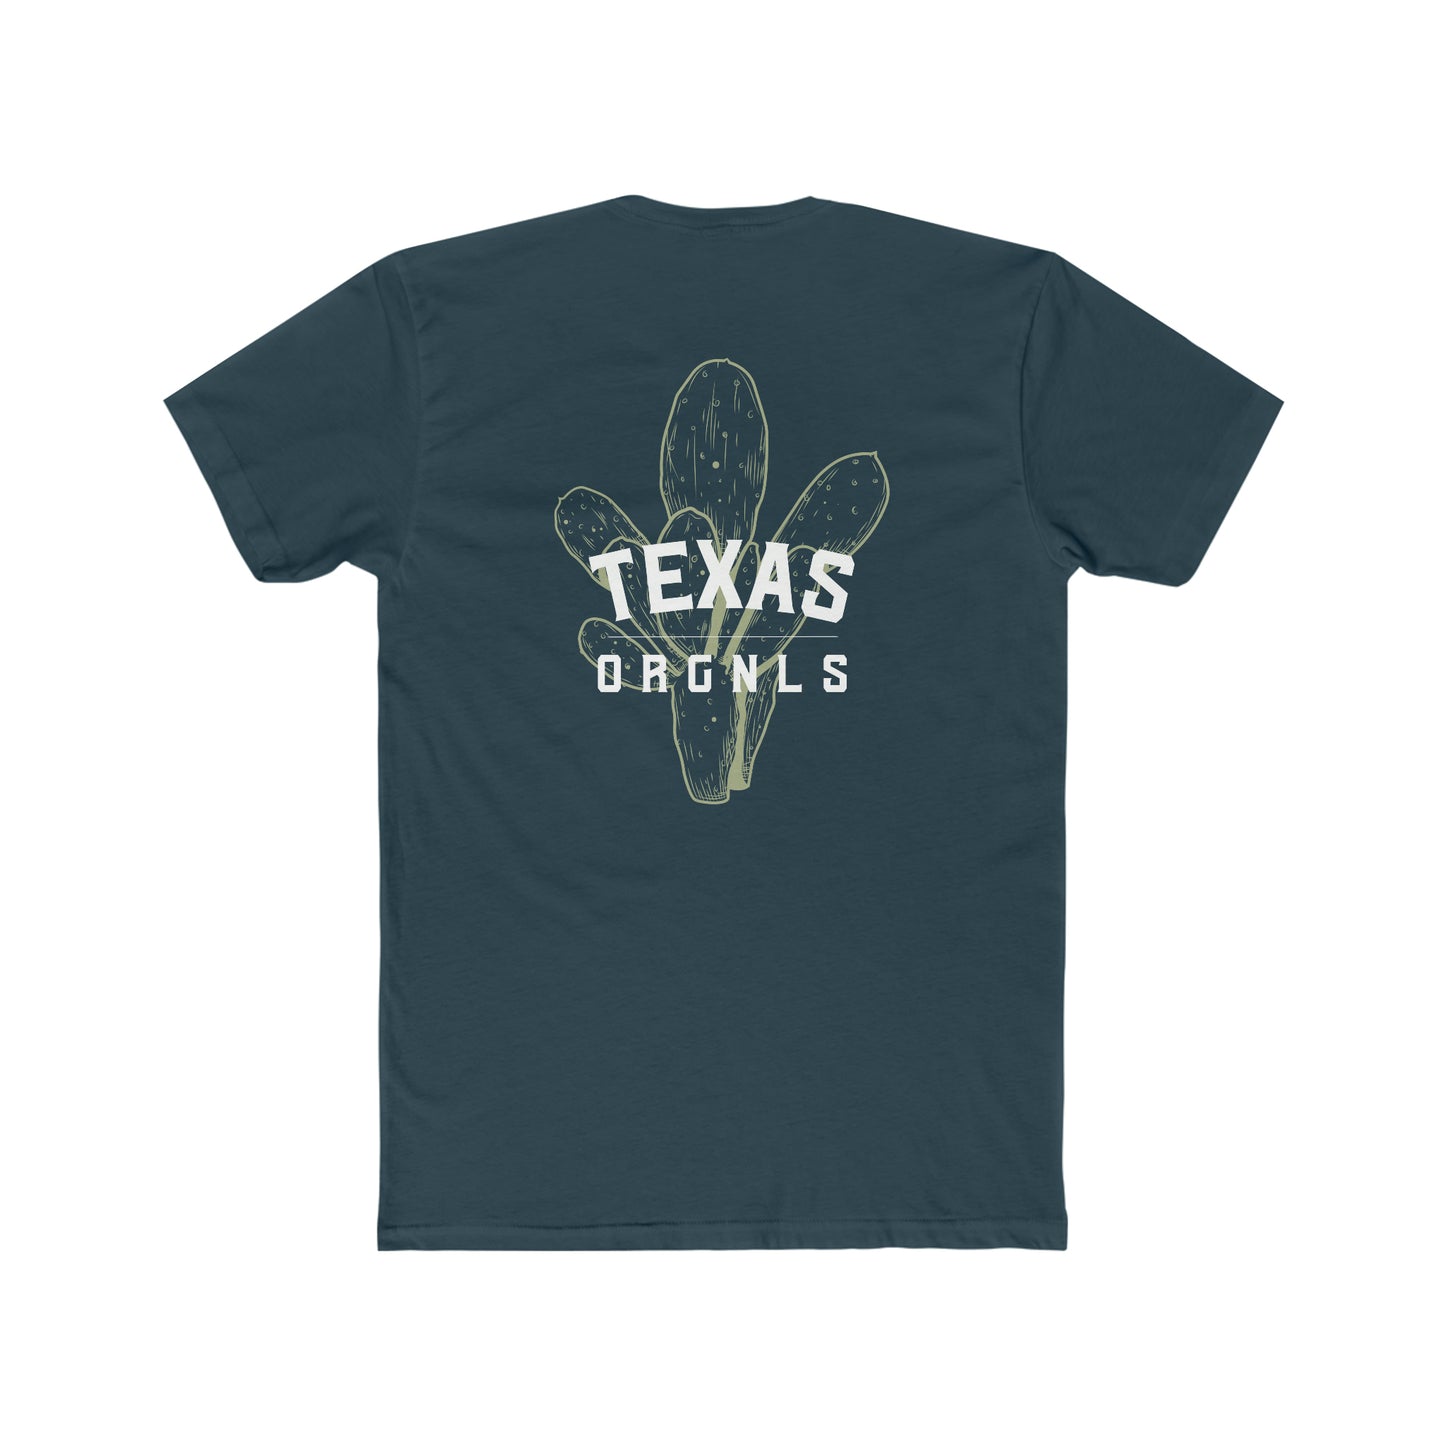 Unisex Texas Orgnls “Cacti” Tee